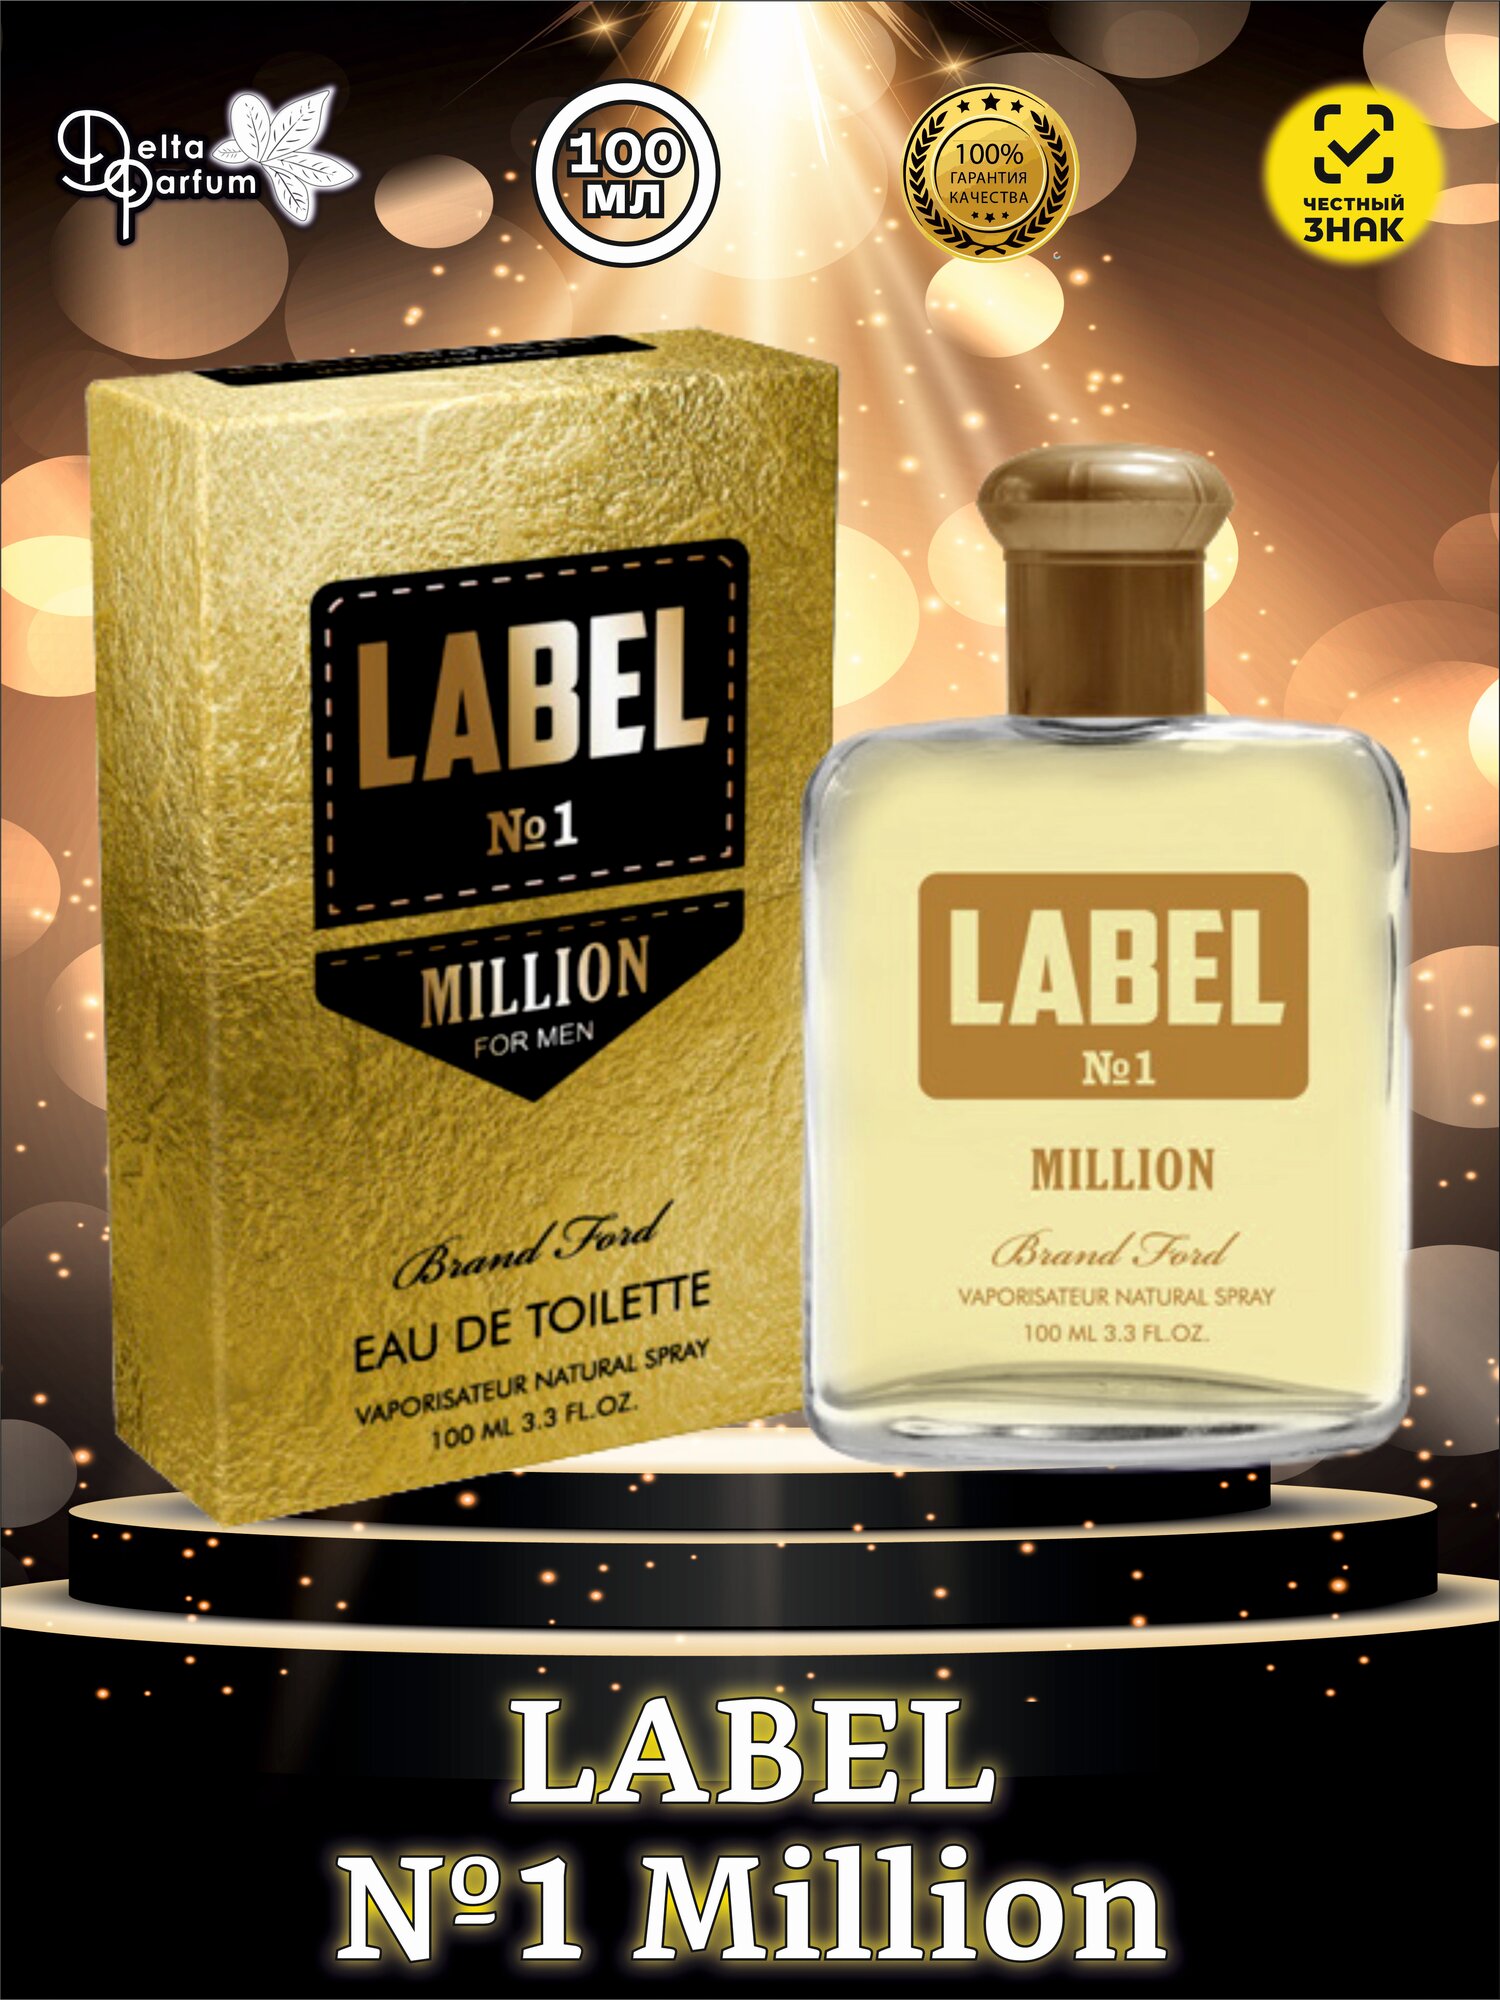 Delta parfum Туалетная вода мужская Label №1 MILLION